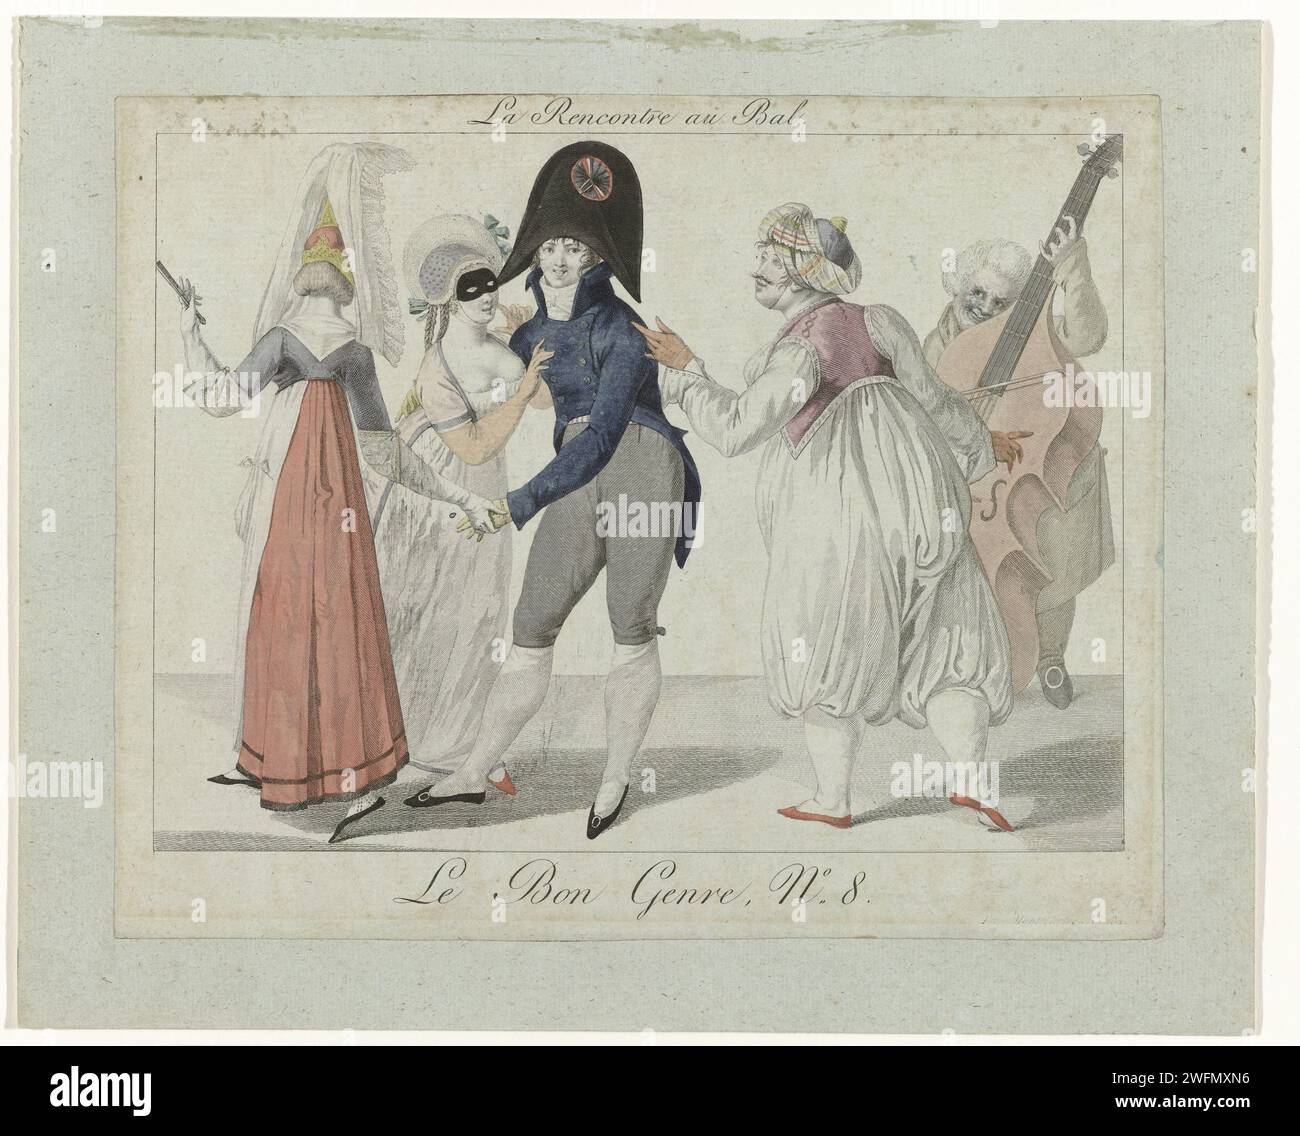 The Good Genre, No. 8: The Meeting at the Ball., Georges Jacques Gatine (möglich), 1801 - 1802 Paris Papier ätzt Mode Teller. Kleid, Kleid (+ Damenkleidung) Stockfoto